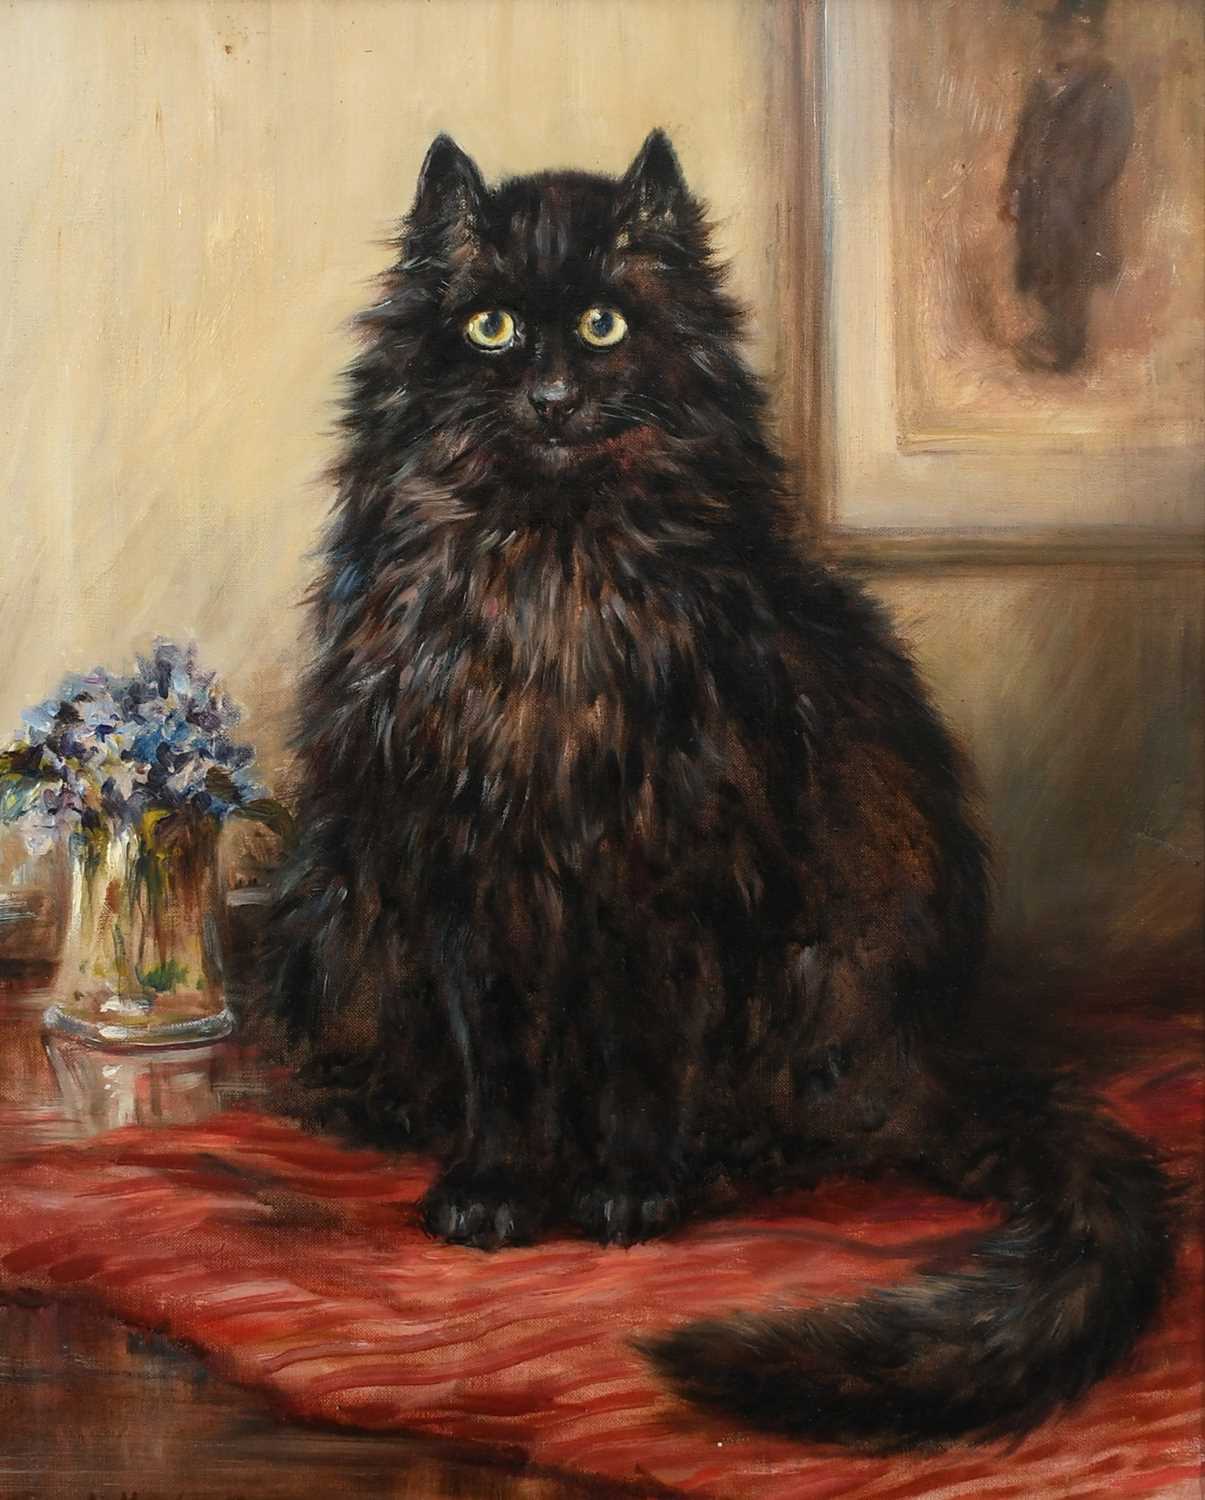 Robert Morley (1857-1941) Black Cat Signed Robert Morley (lower left) Oil on canvas 50.8 x 40.6cm